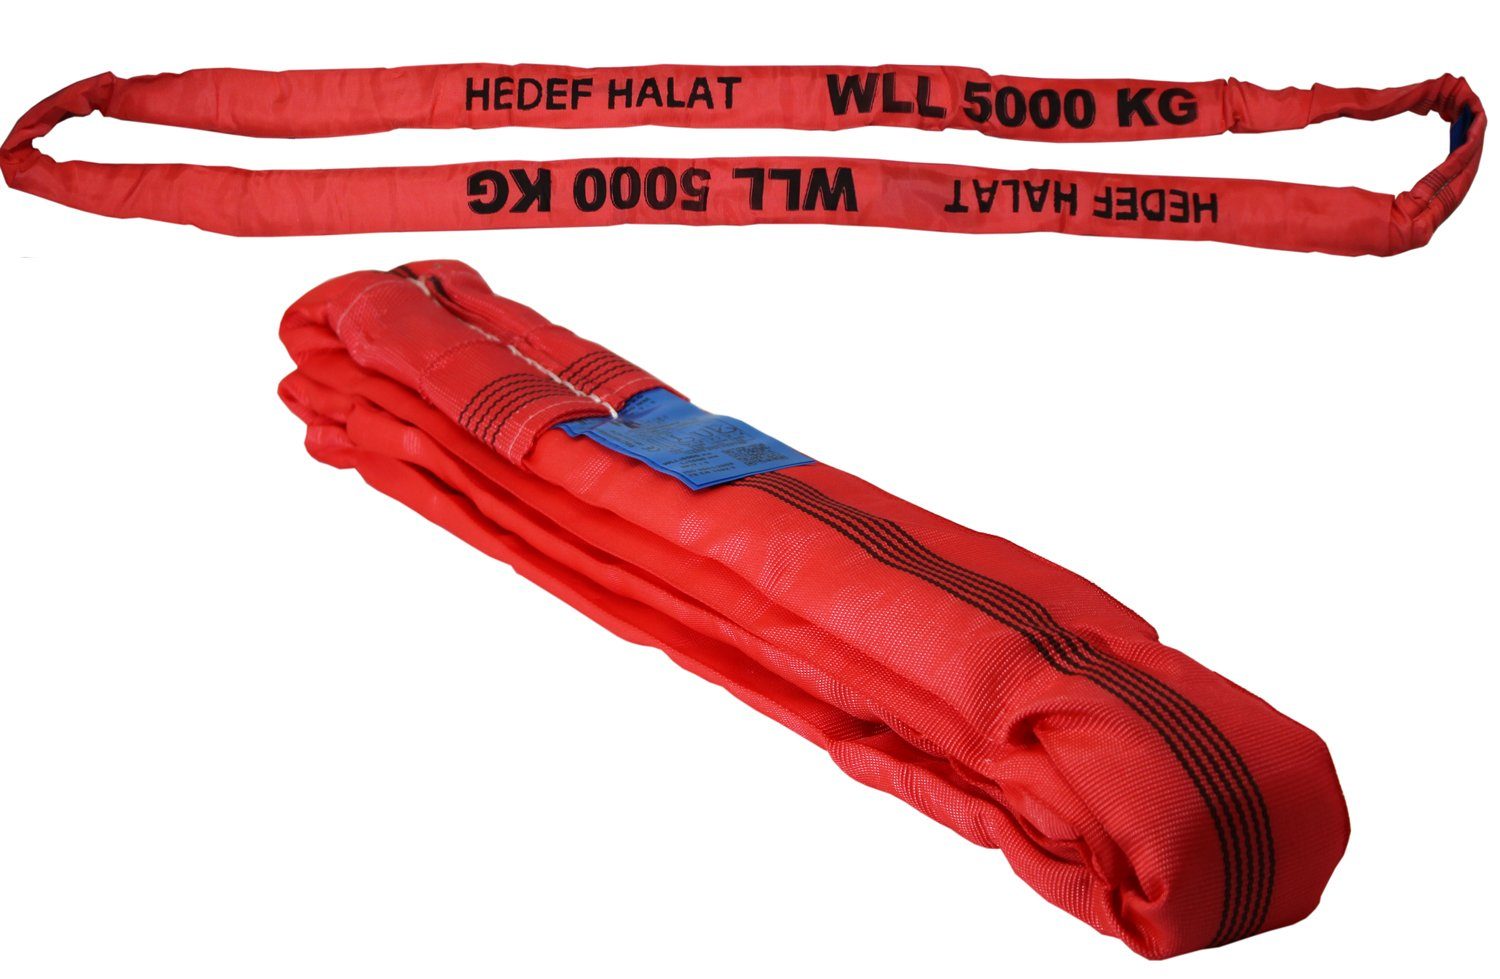 HEDEF HALAT Rundschlinge mit Einfachmantel 5 Tonnen 3 Meter SF: 7/1 DIN EN 1492-2 Hebeband, Rundschlingen Bandschlinge Hebegurt 3 m (umfang 6 m)